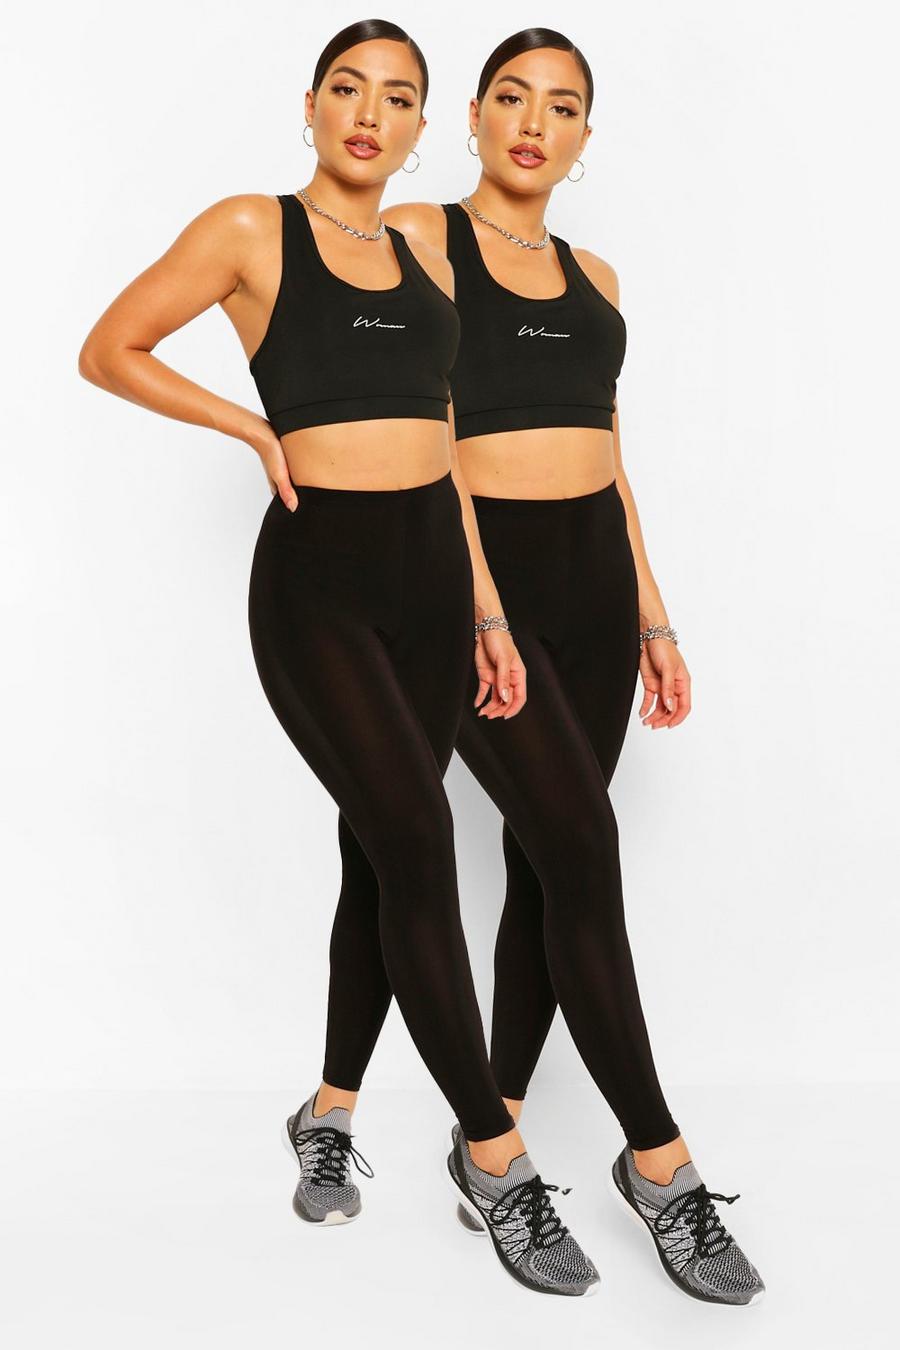 https://media.boohoo.com/i/boohoo/fzz11854_black_xl/female-black-2-pack-booty-boost-workout-leggings/?w=900&qlt=default&fmt.jp2.qlt=70&fmt=auto&sm=fit